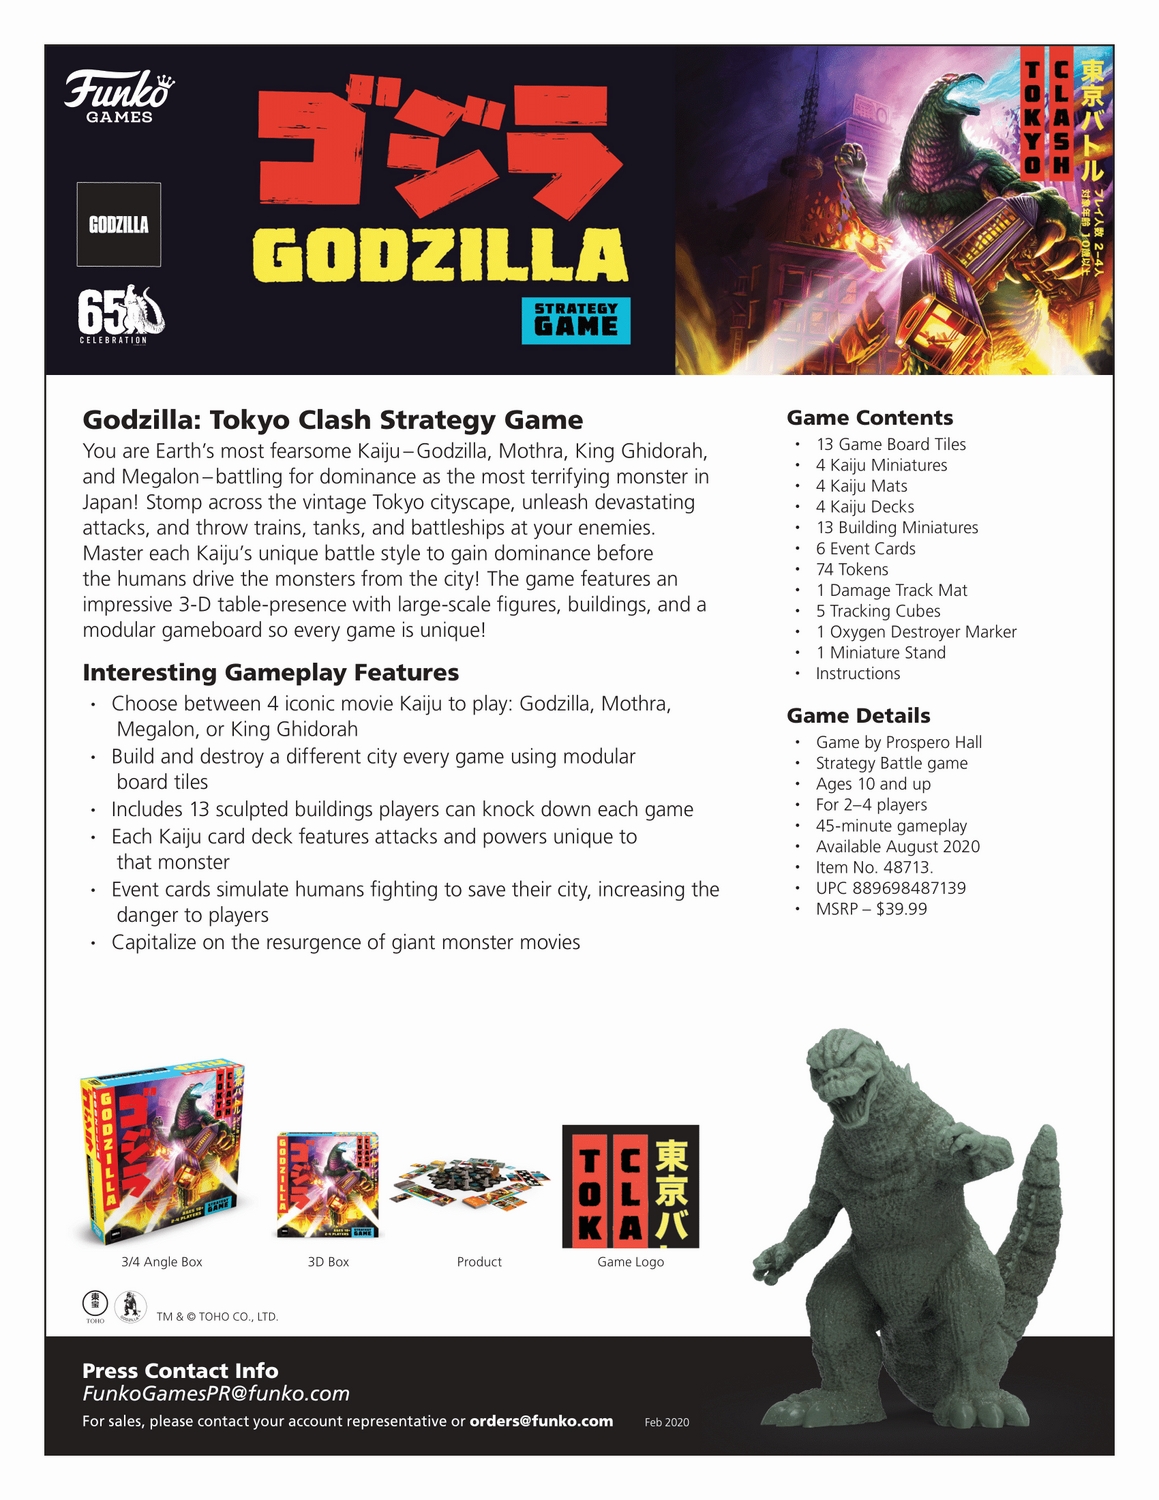 Godzilla_SalesSheets_NYTF-1.jpg